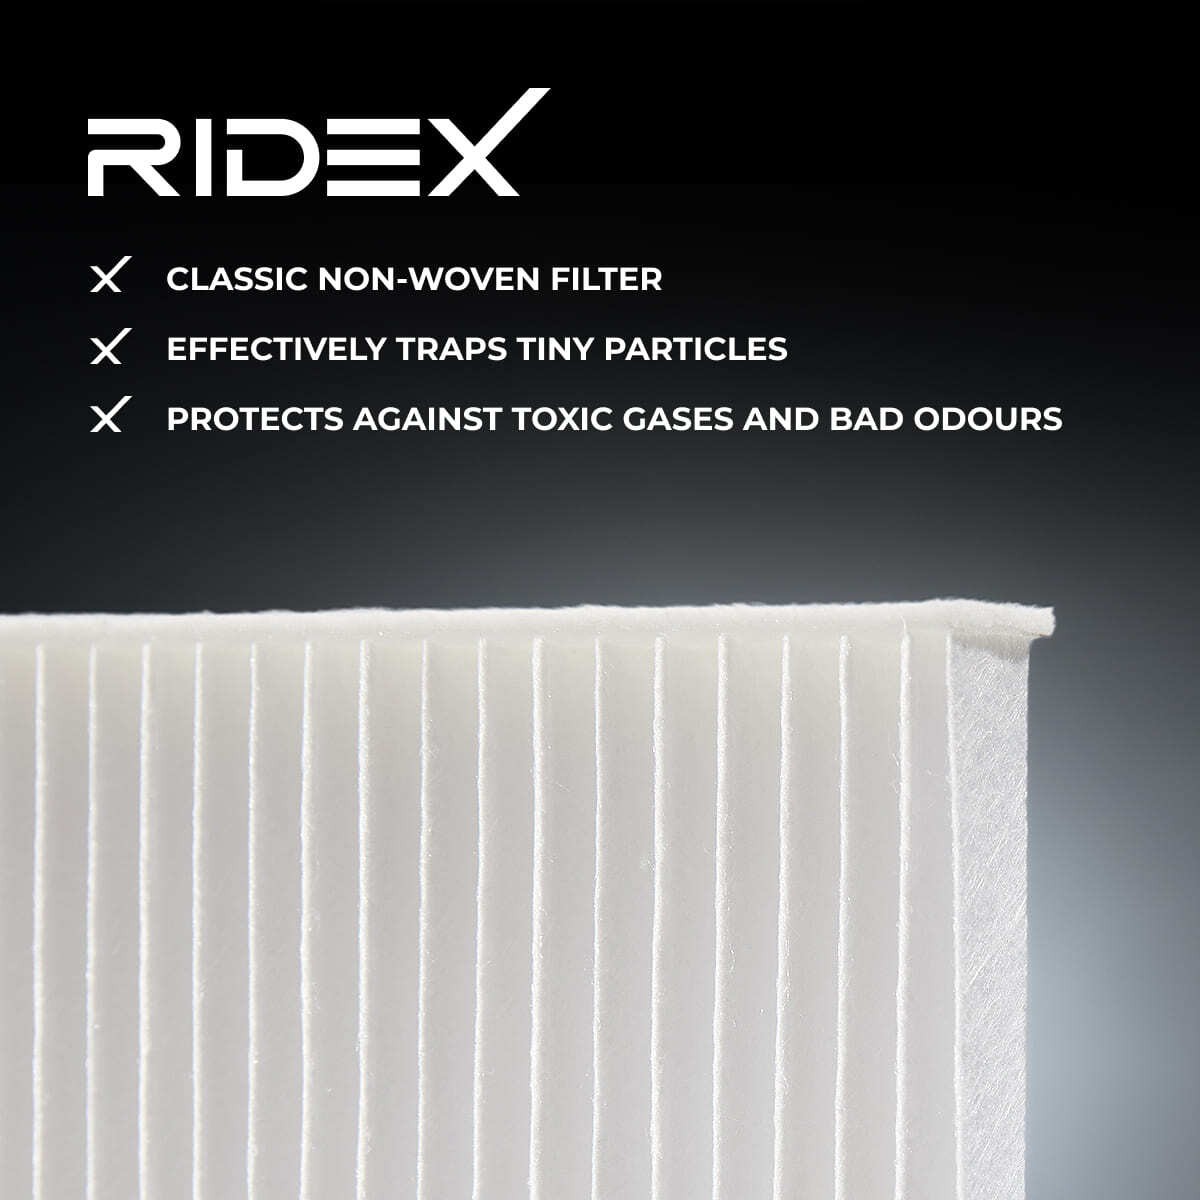 424I0118 Air con filter 424I0118 RIDEX Pollen Filter, Particulate Filter, Filter Insert, 218 mm x 374 mm